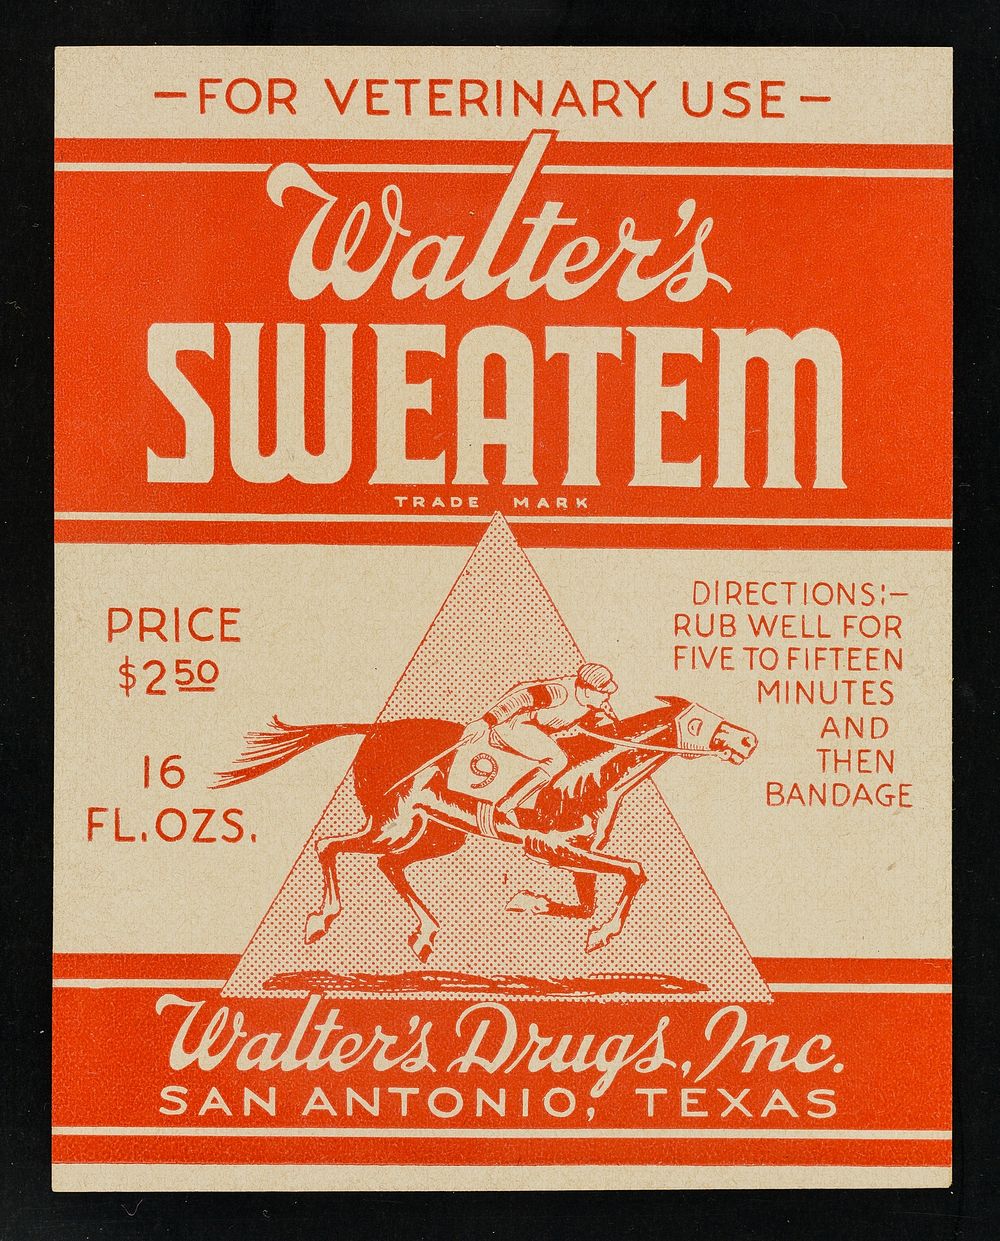 Walter's Sweatem : Price $2.50, 16 fl. ozs. / Walter's Drugs, Inc.